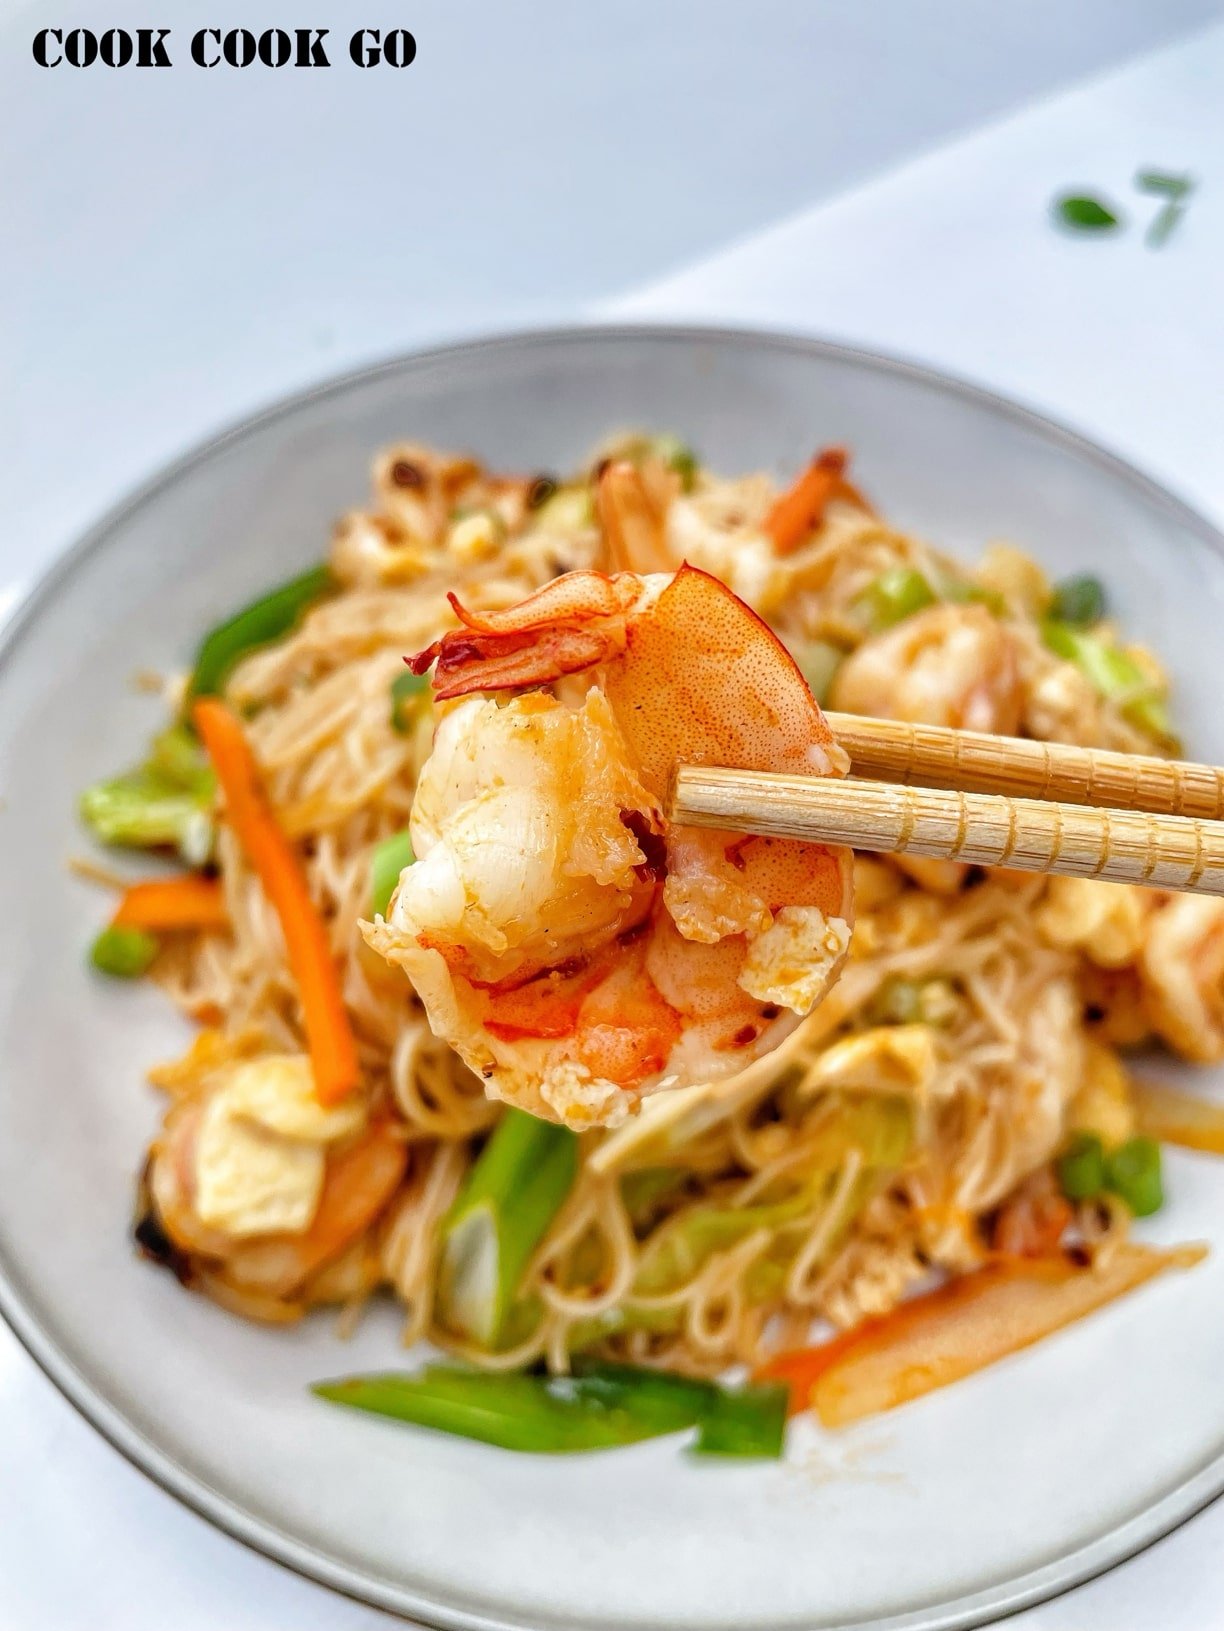 stir fry rice noodles with shrimp and vegetables